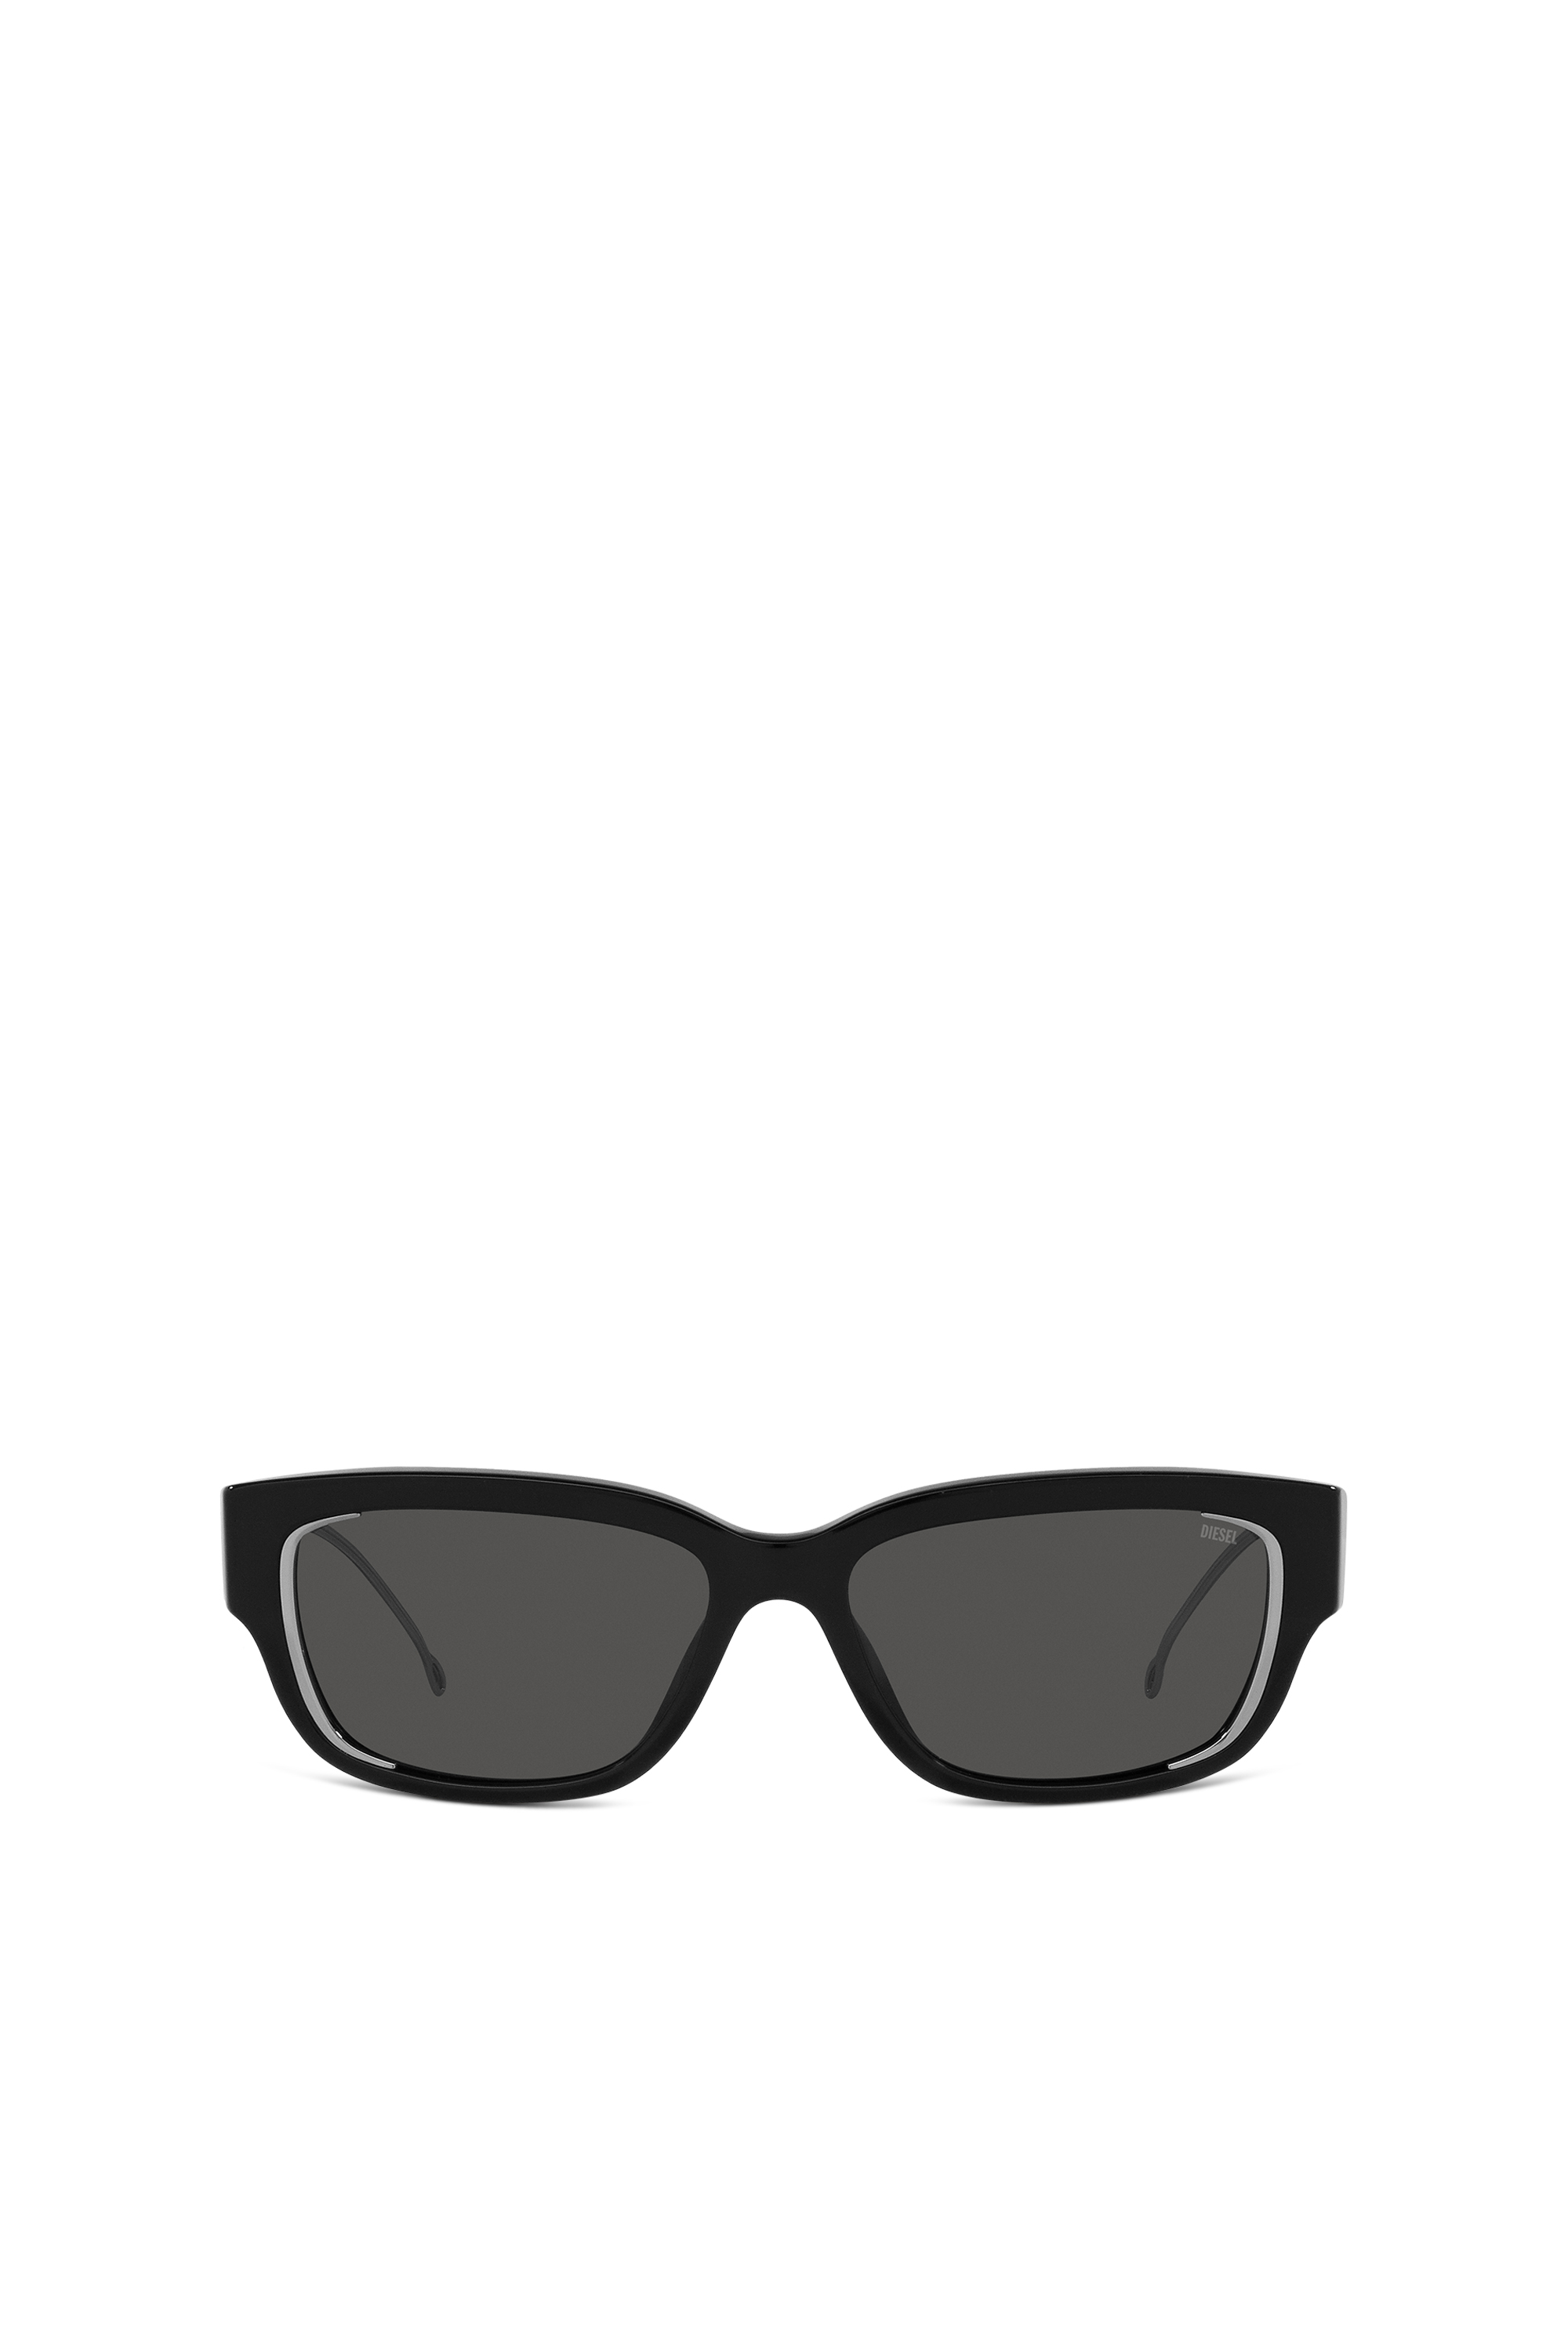 Diesel - Gafas ocn estilo esencial - Gafas de sol - Unisex - Negro